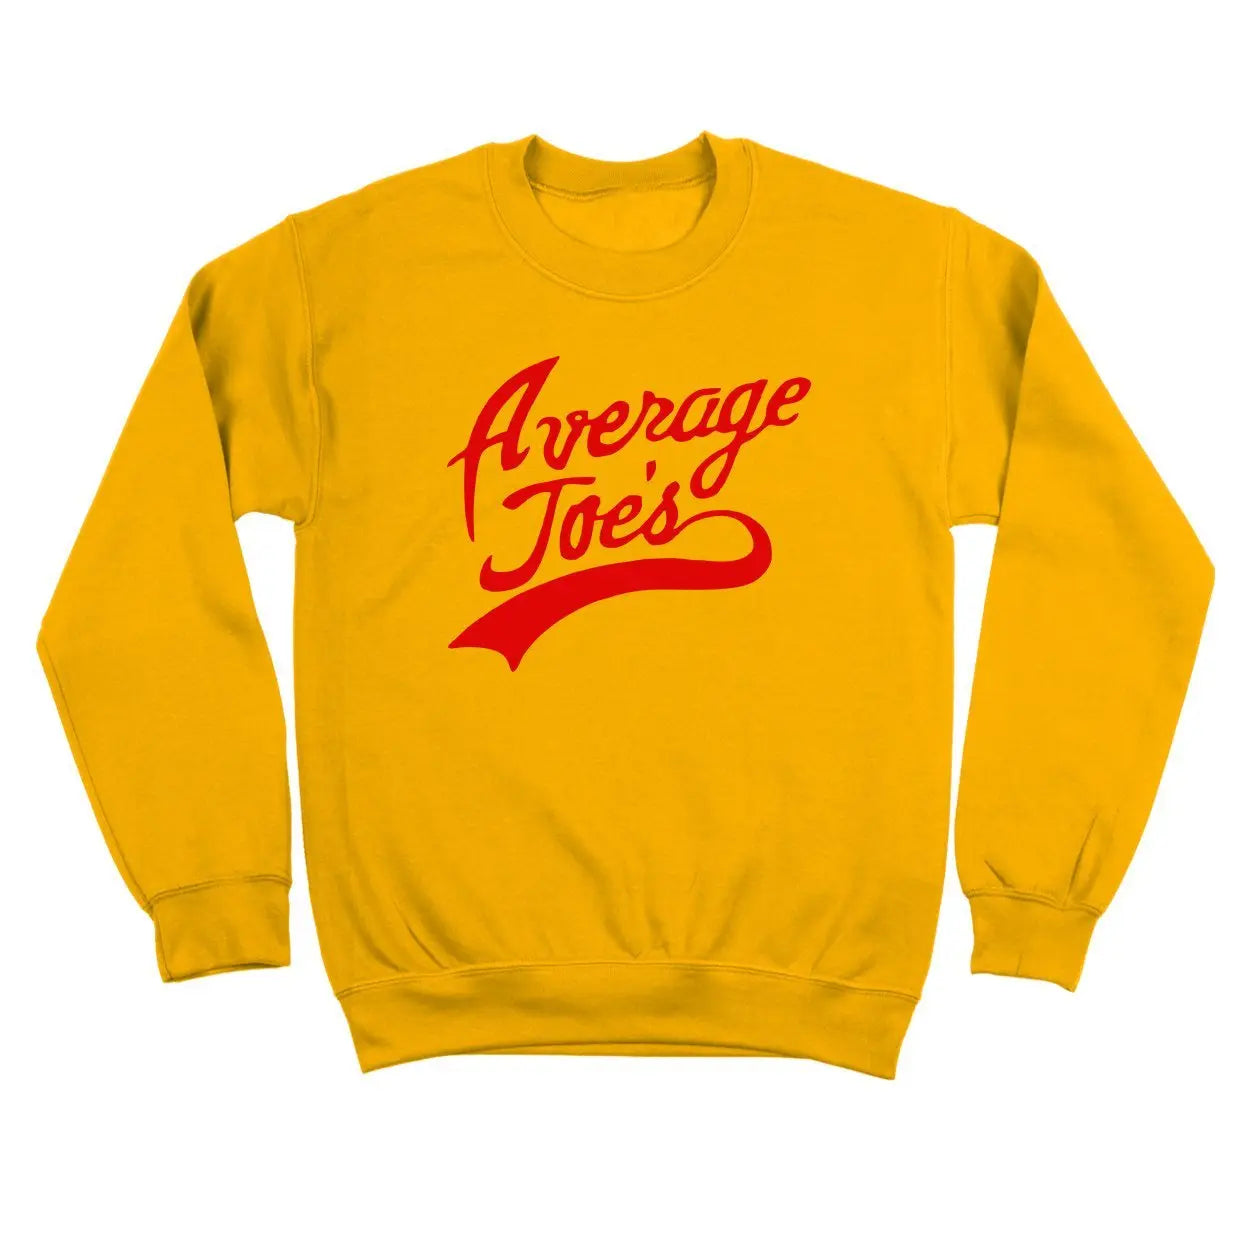 Average Joes Gym Tshirt - Donkey Tees